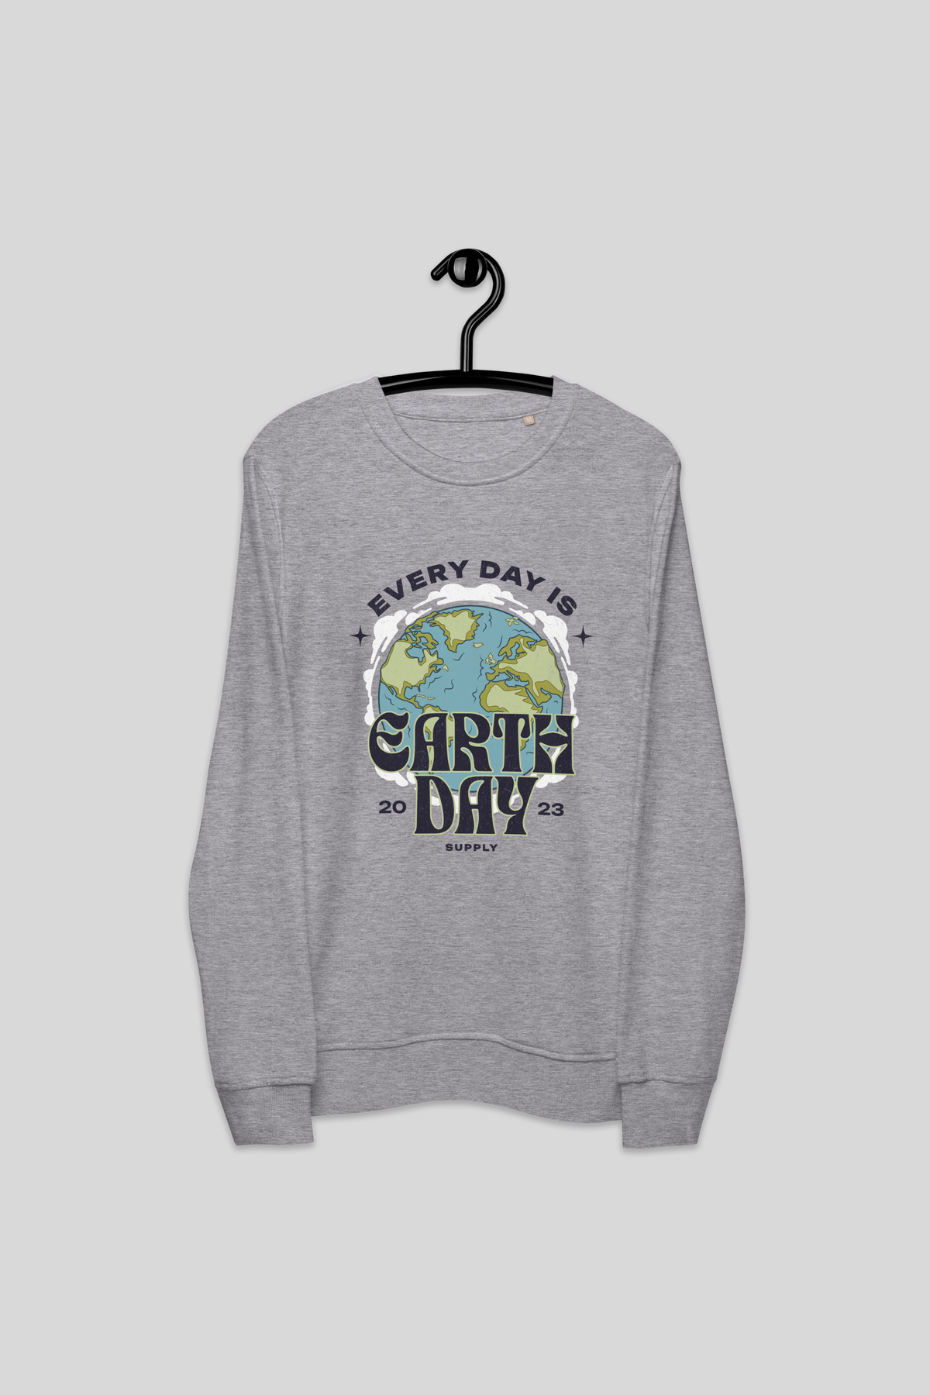 Every Day is Earth Day Unisex organic sweatshirt